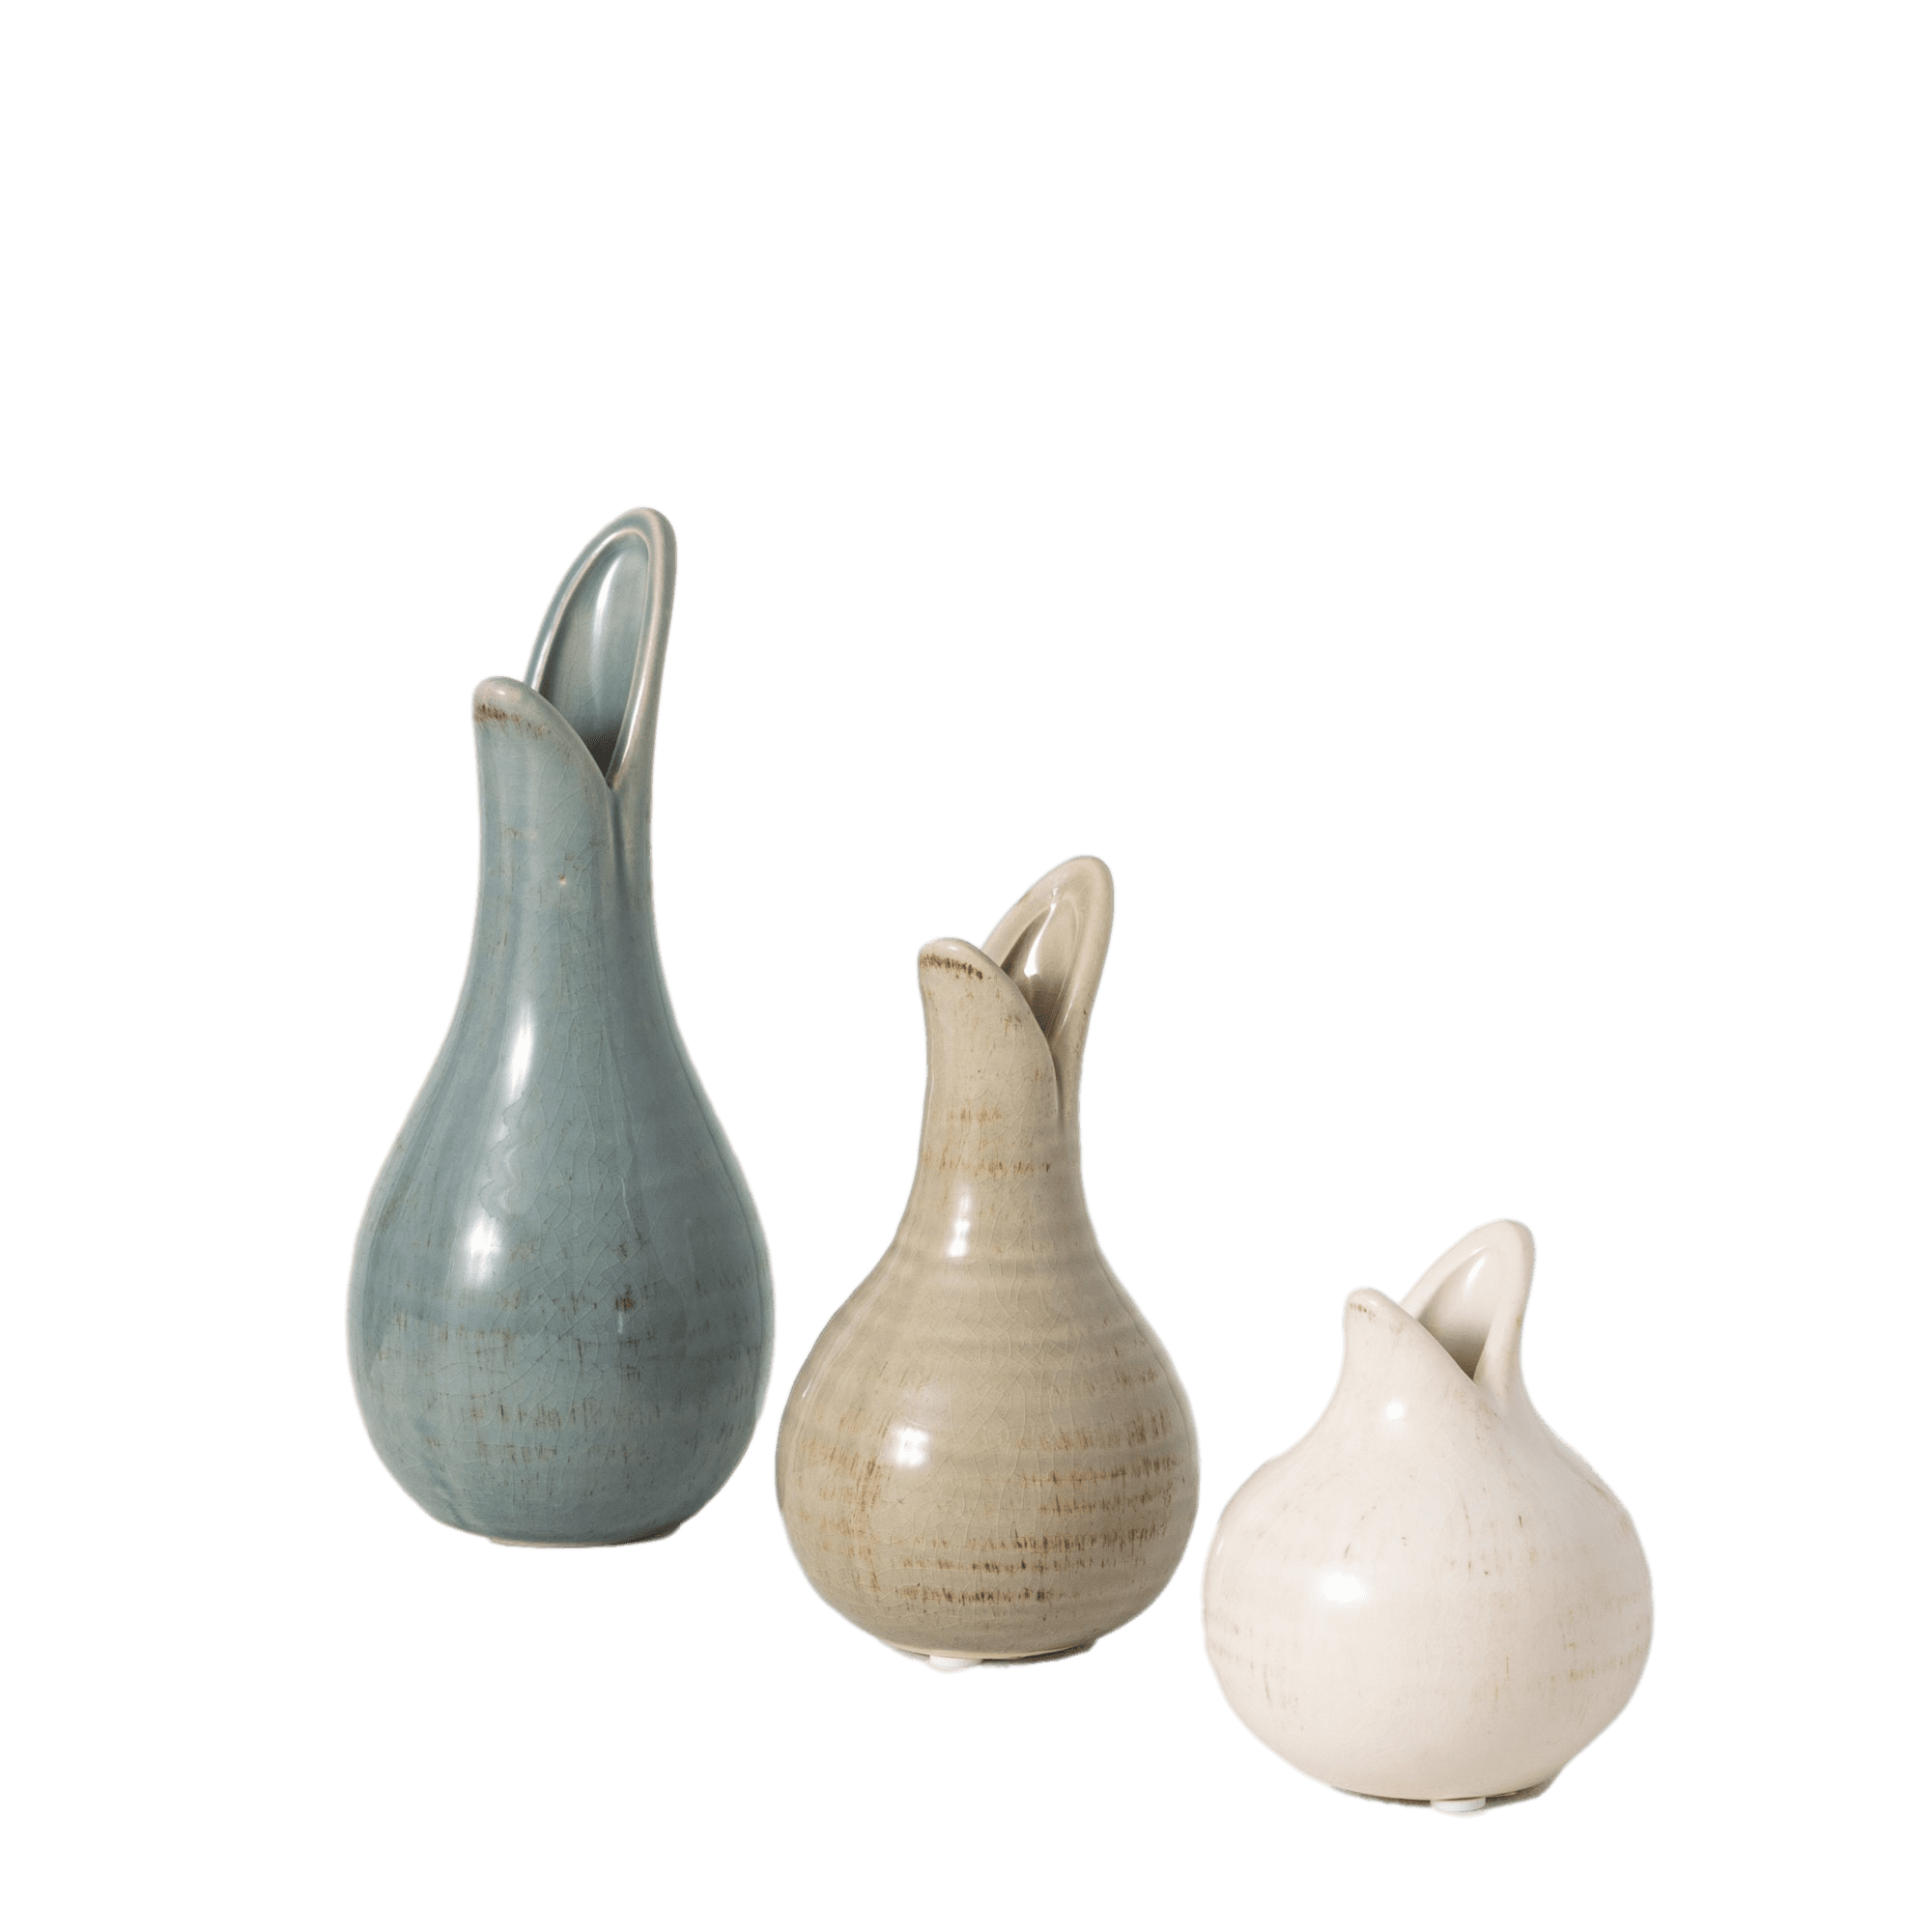 Details about   Scandinavian Minimalist Ceramic Vase Artwork Creative Design Home Decoration 